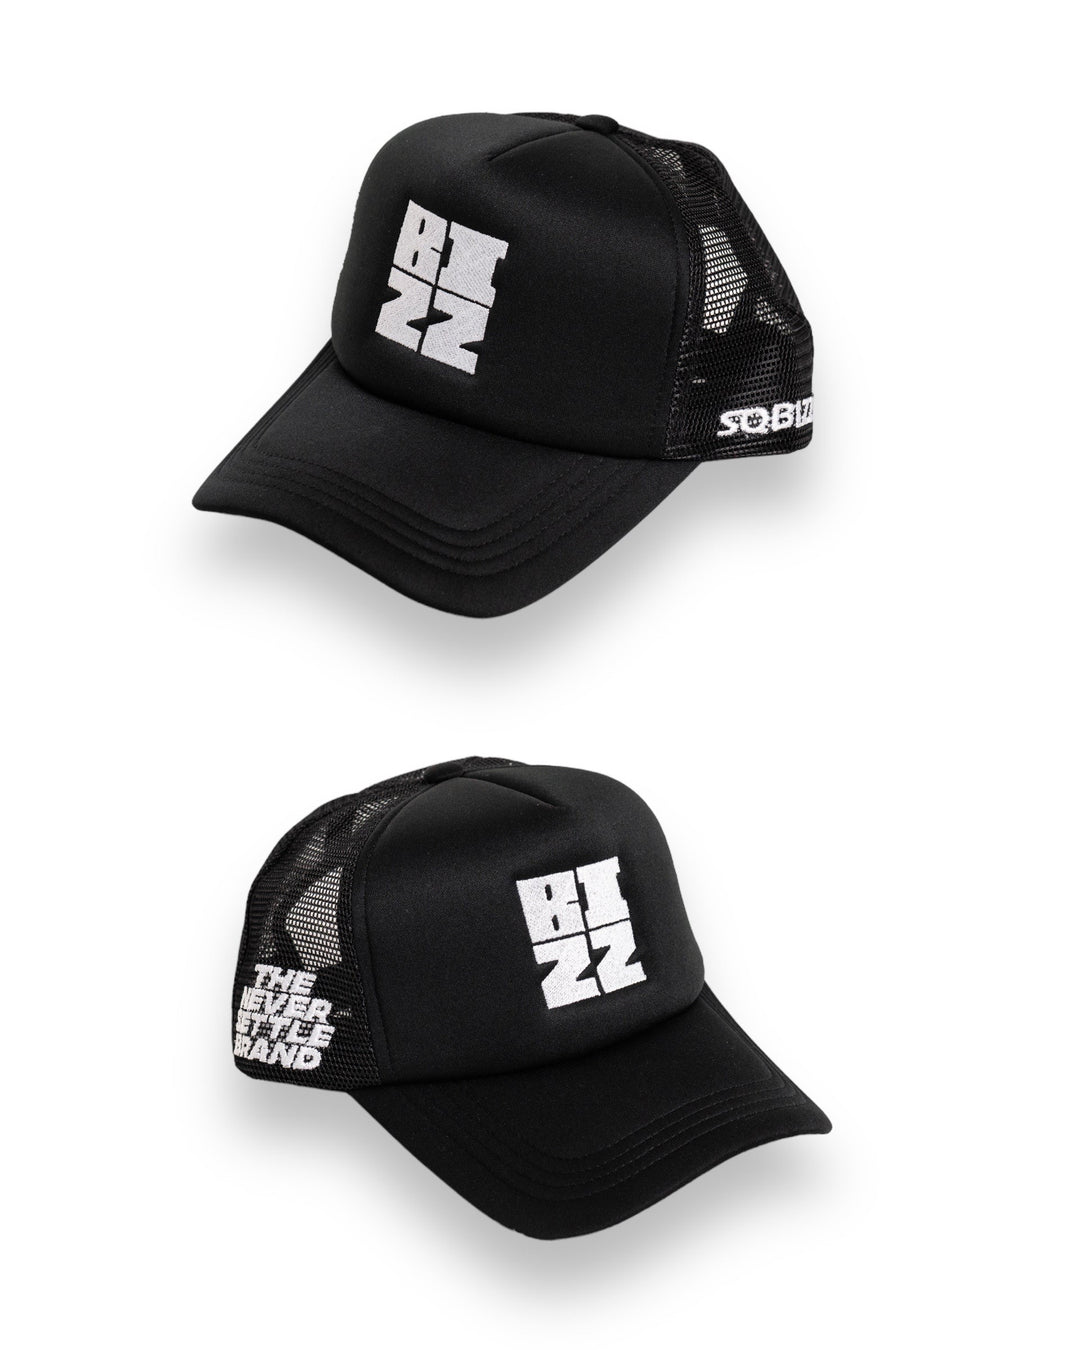 Bizz Trucker Hat in Black/White